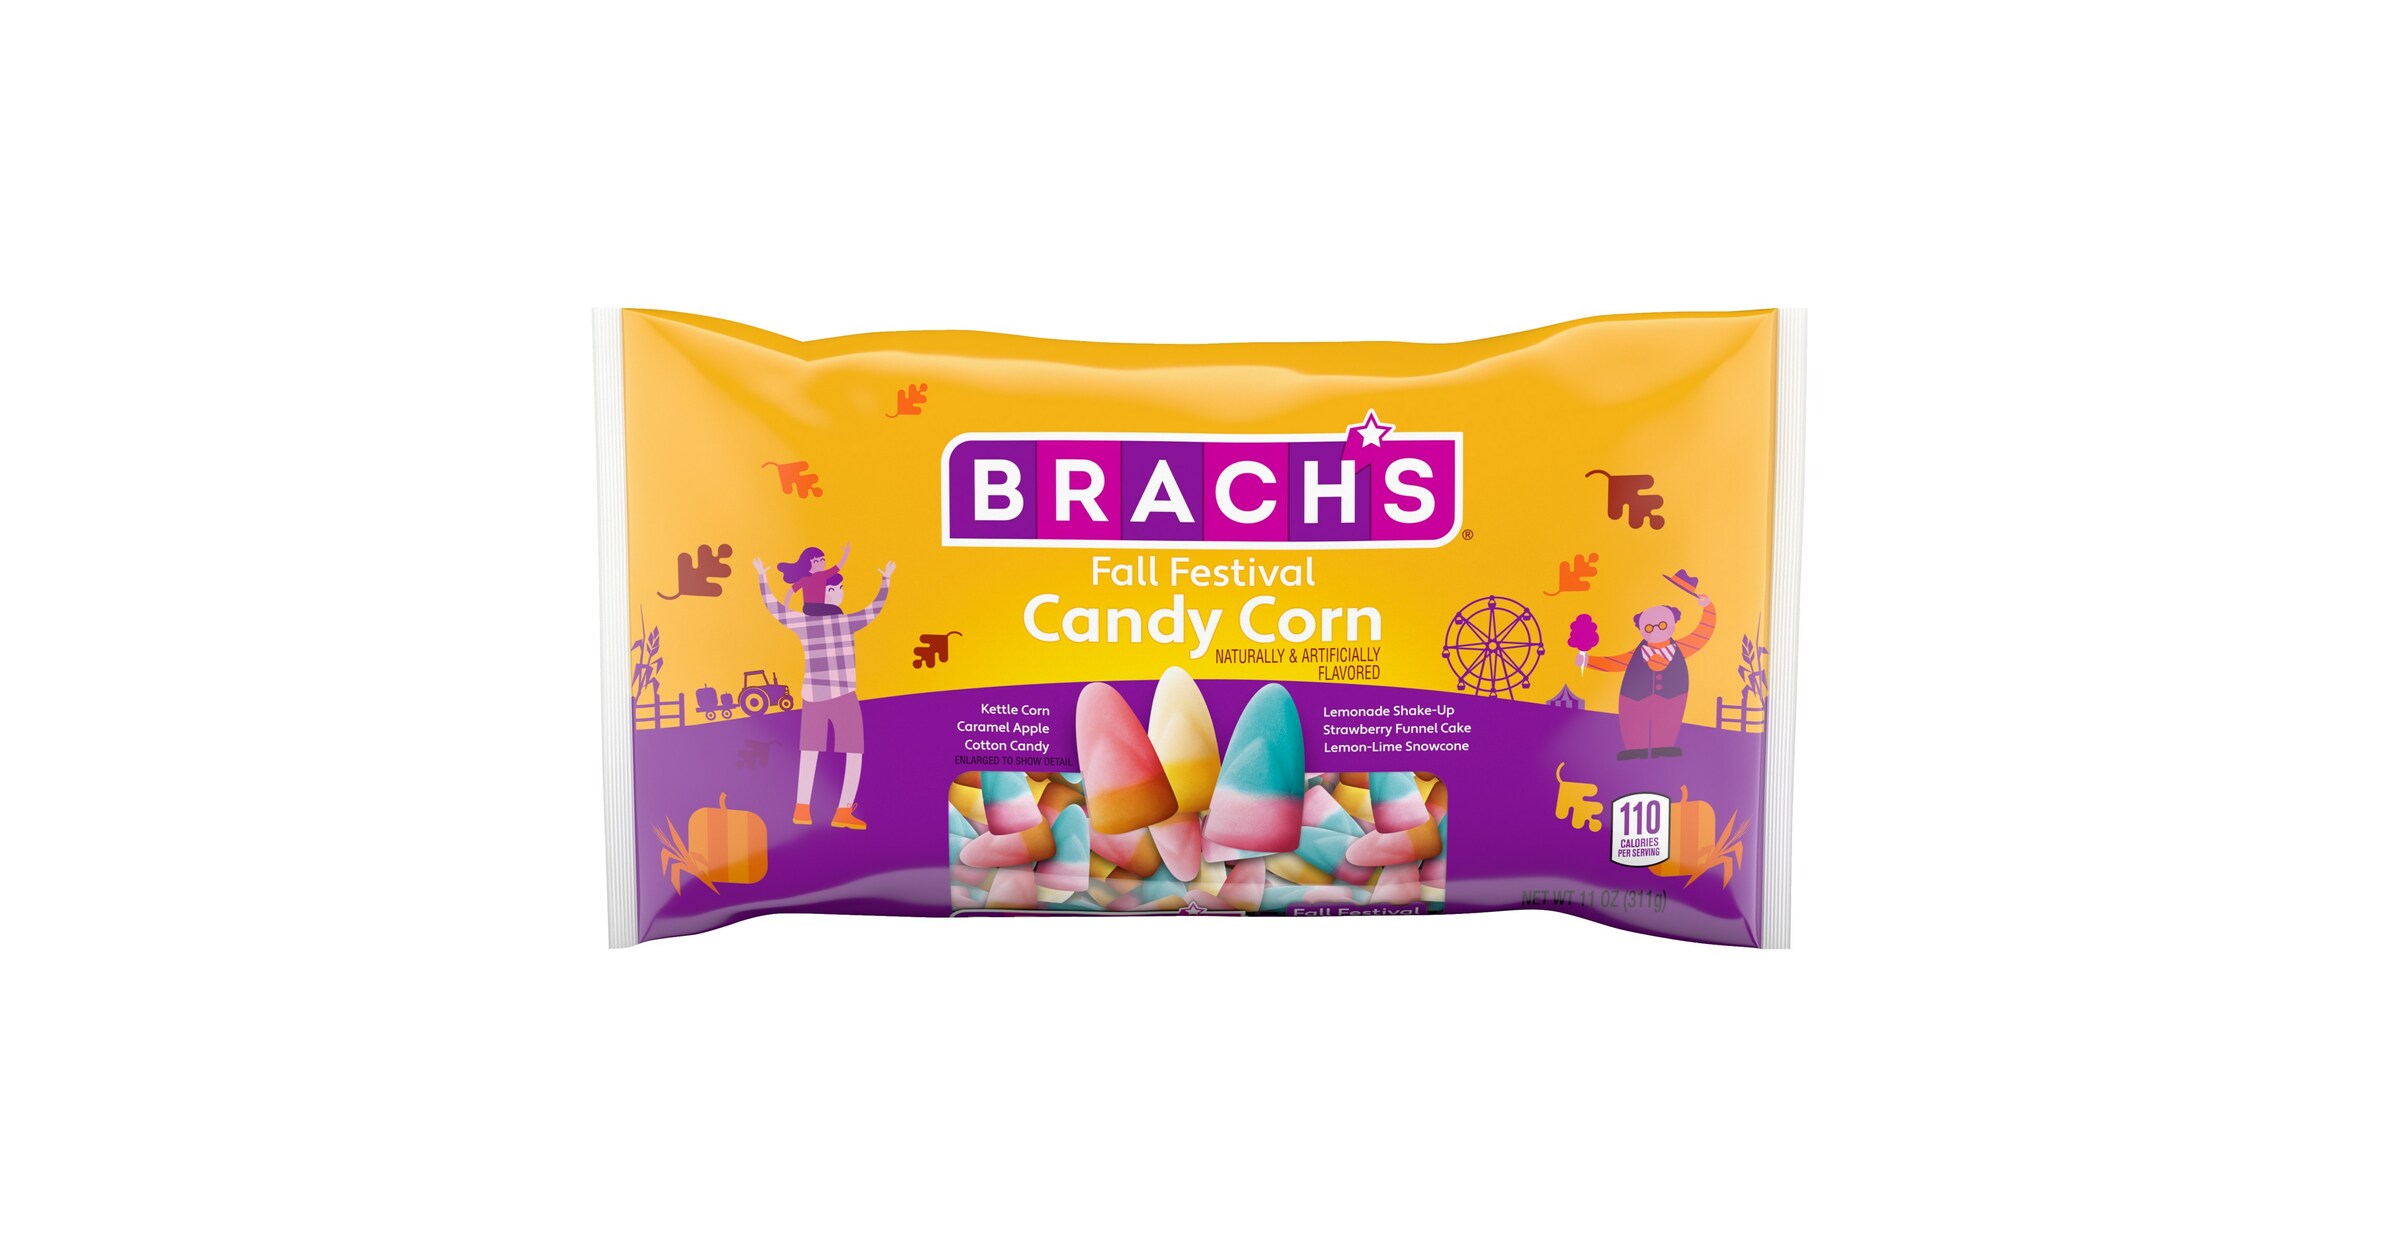 Brach's Candy Corn Club Sweepstakes (100 Winners + 5,000 Rebate